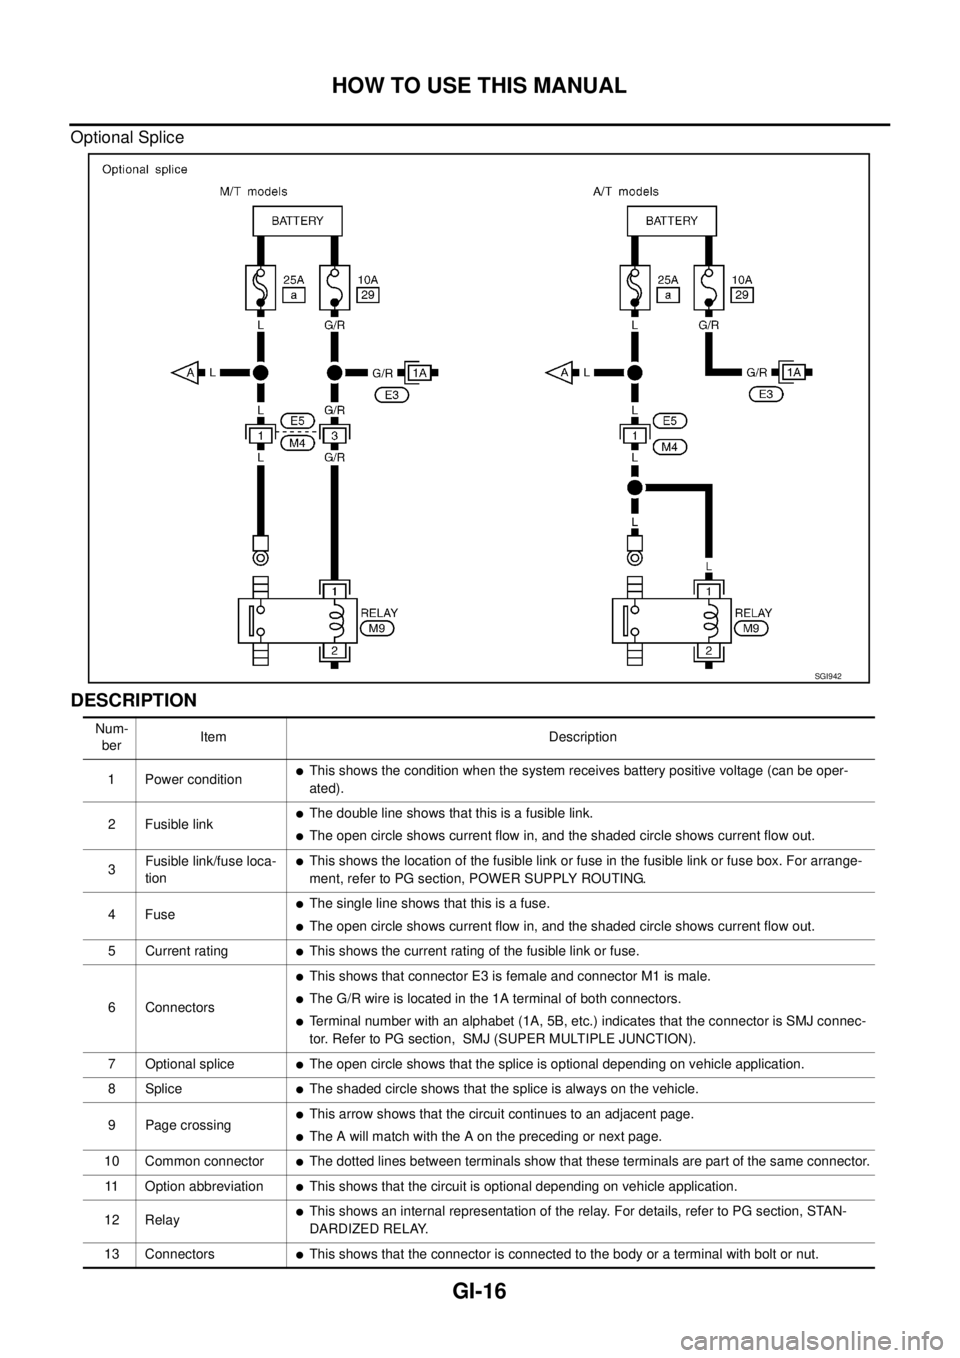 NISSAN X-TRAIL 2003  Service Repair Manual GI-16
HOW TO USE THIS MANUAL
 
Optional Splice
DESCRIPTION 
SGI942
Num-
berItem Description
1 Power condition
This shows the condition when the system receives battery positive voltage (can be oper-
